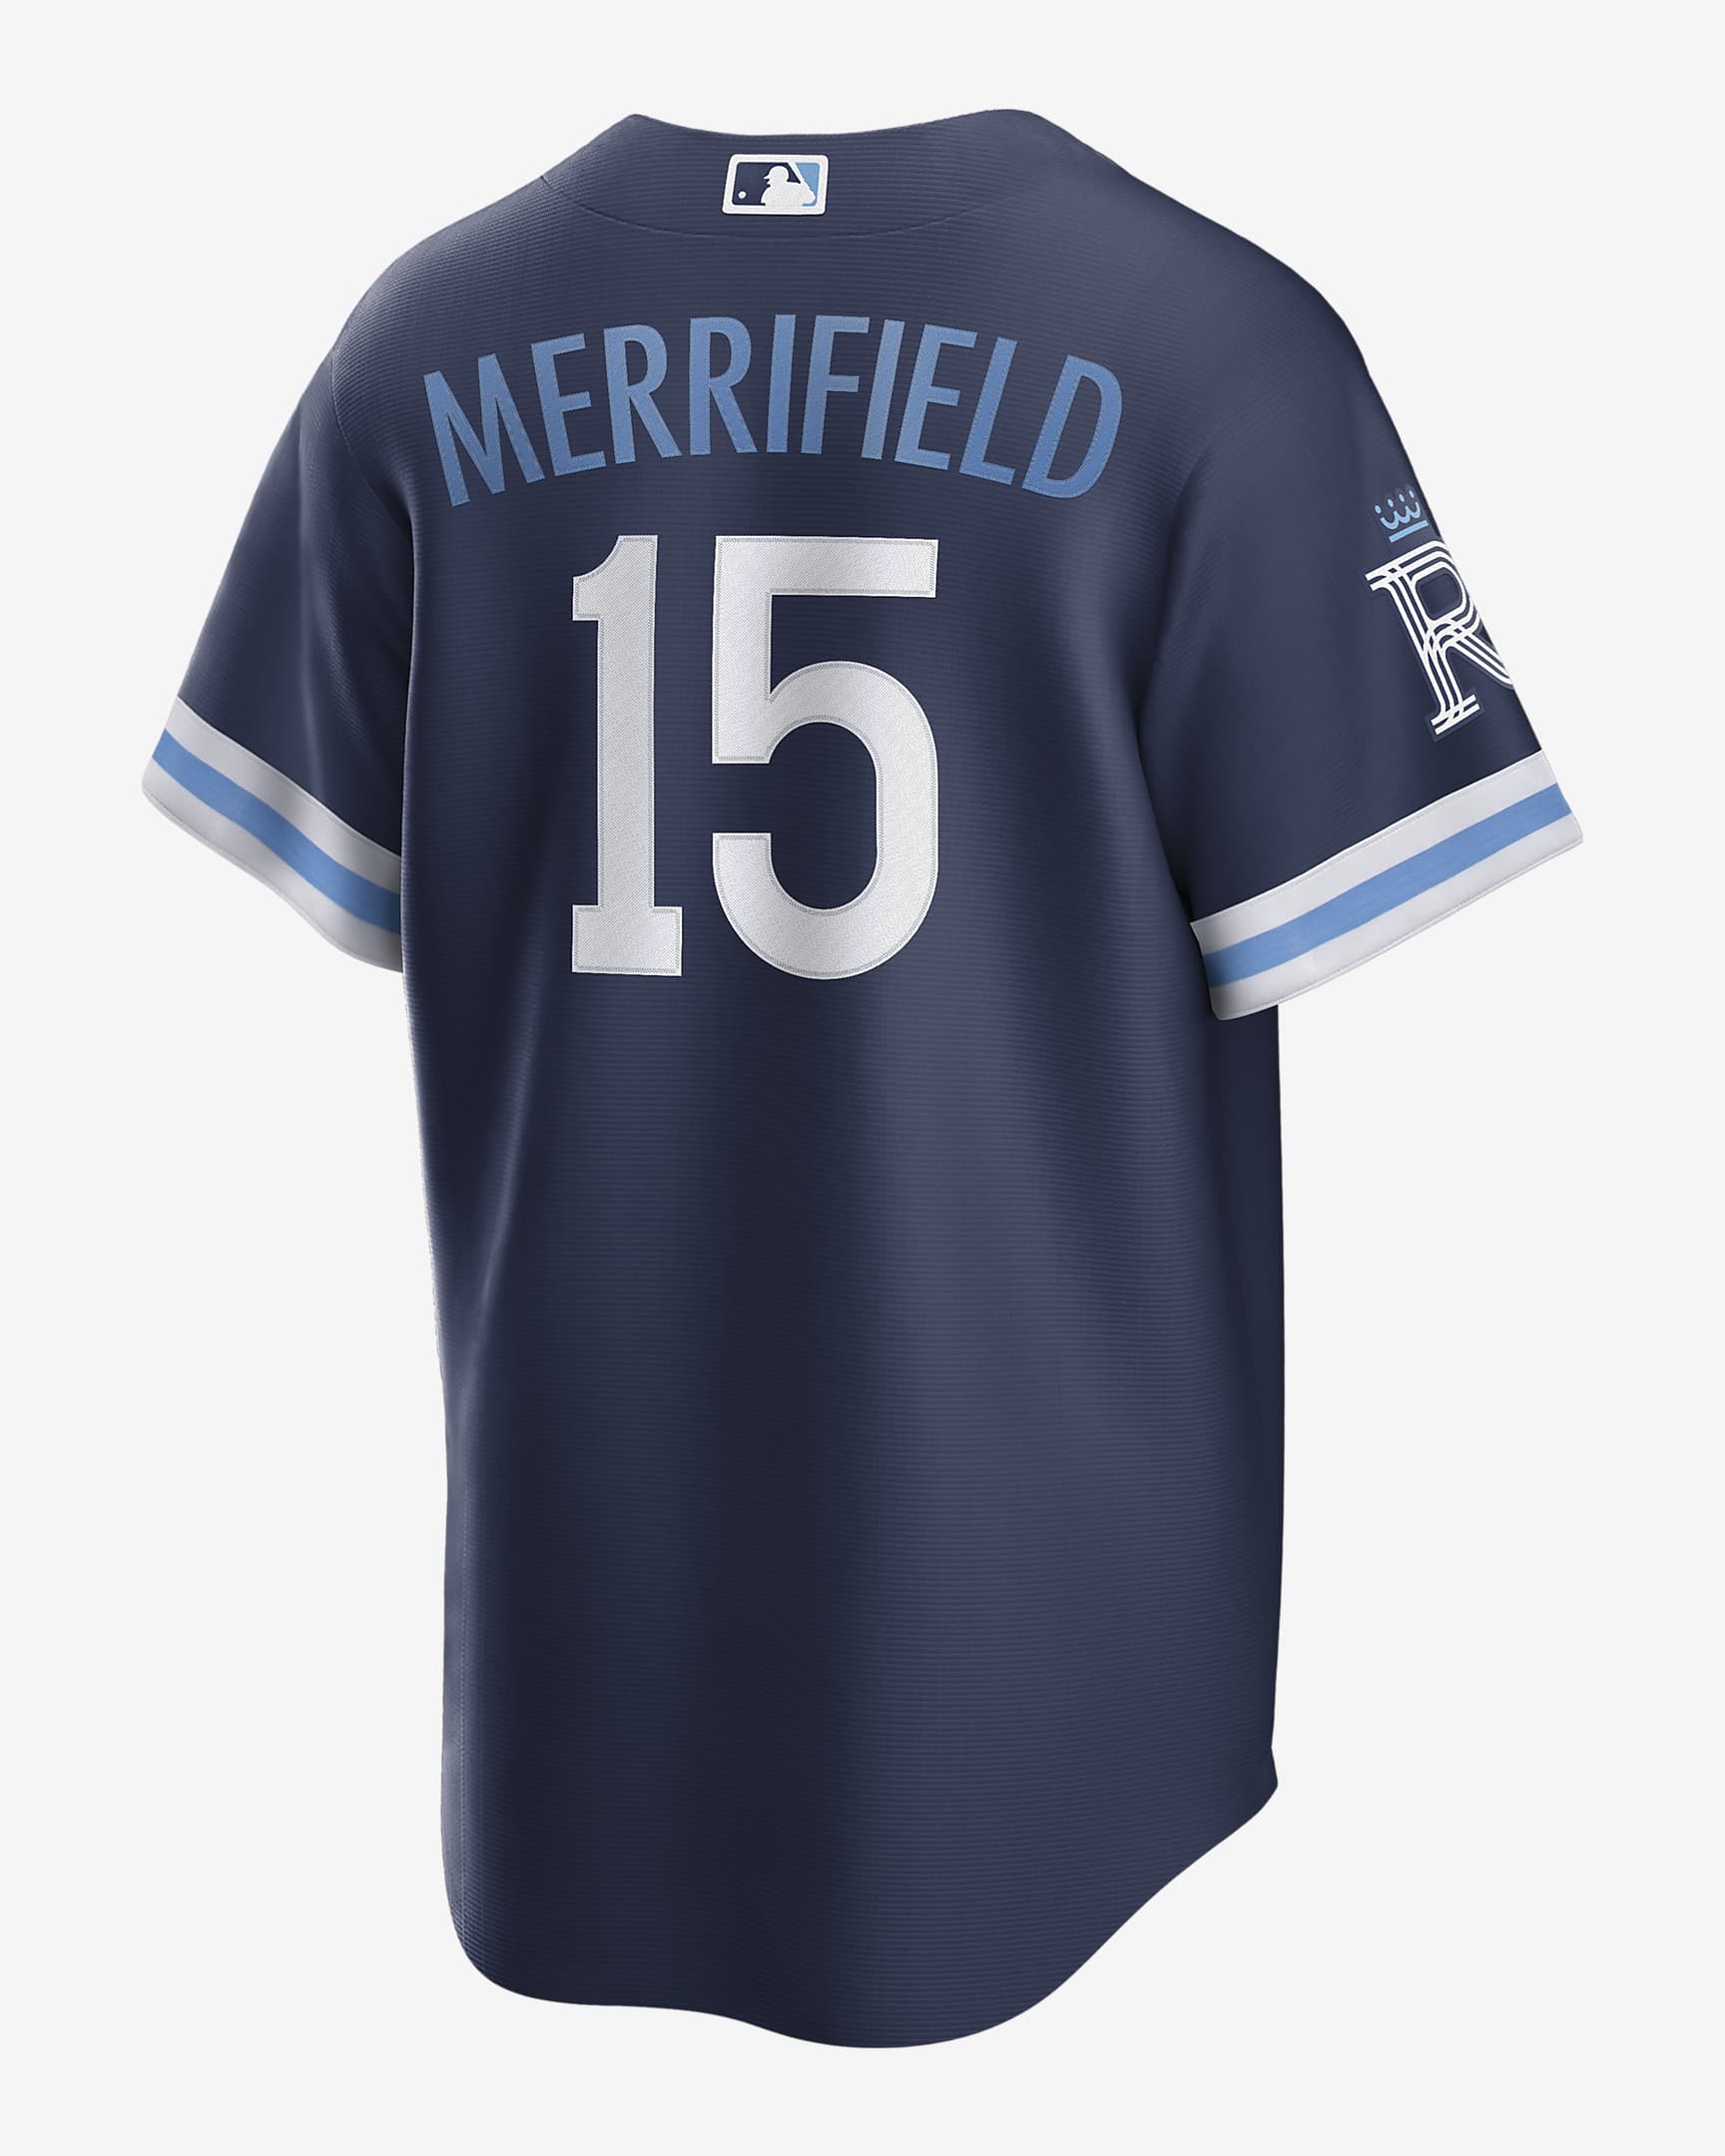 MLB Kansas City Royals City Connect (Whit Merrifield) Men's Replica ...